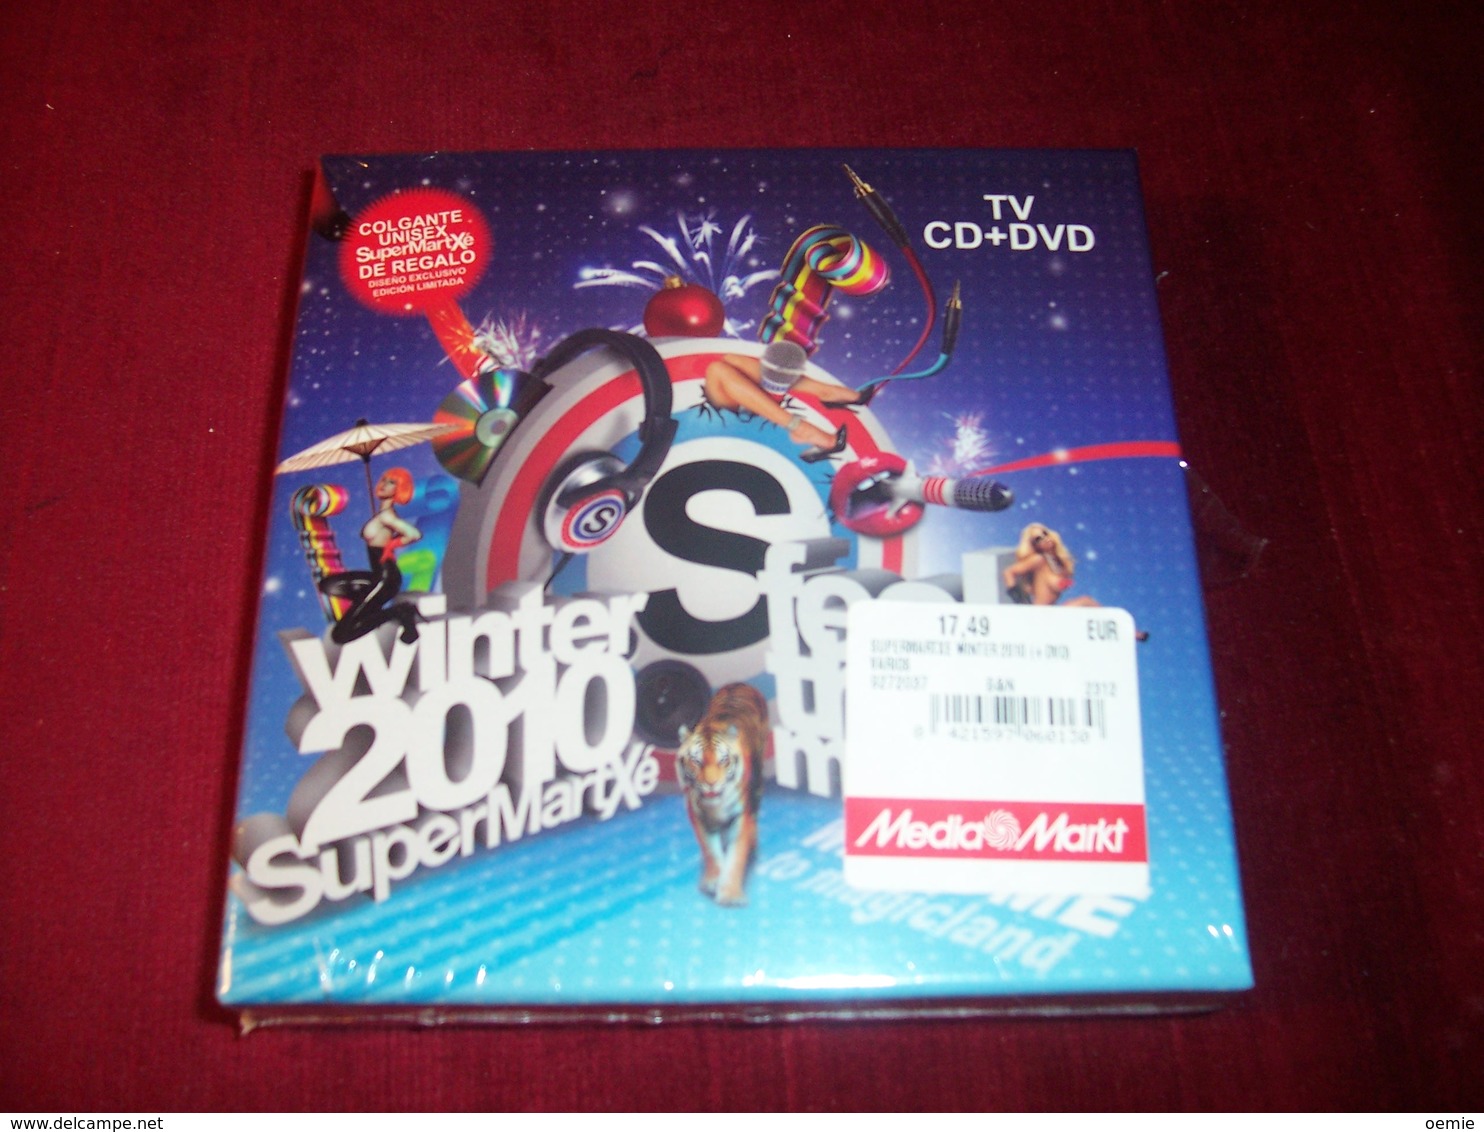 SUPERMARTXE WINTER 2010 FEEL THE MUSIC   COMPILATION STYLE DEEP HOUSE PROGRESSIVE TRANCE  CD + DVD - Dance, Techno & House